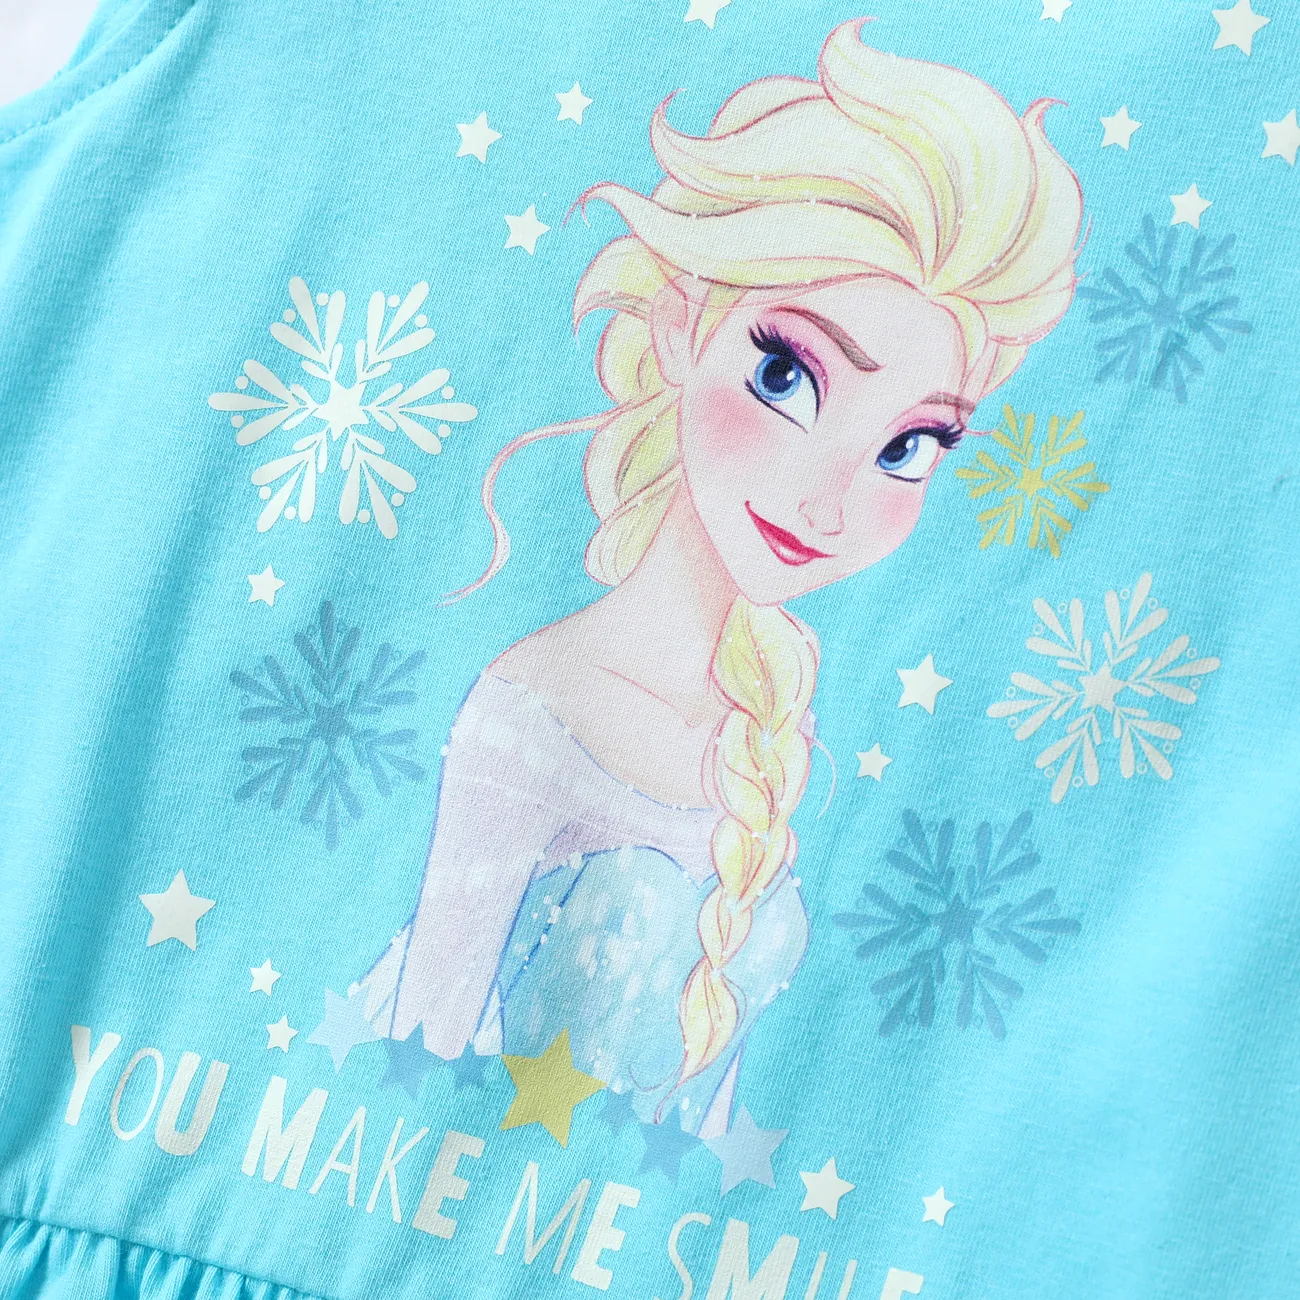 Disney Frozen Elsa 1pc Toddler Girls Naia™ Character Dress

 Turquoise big image 1